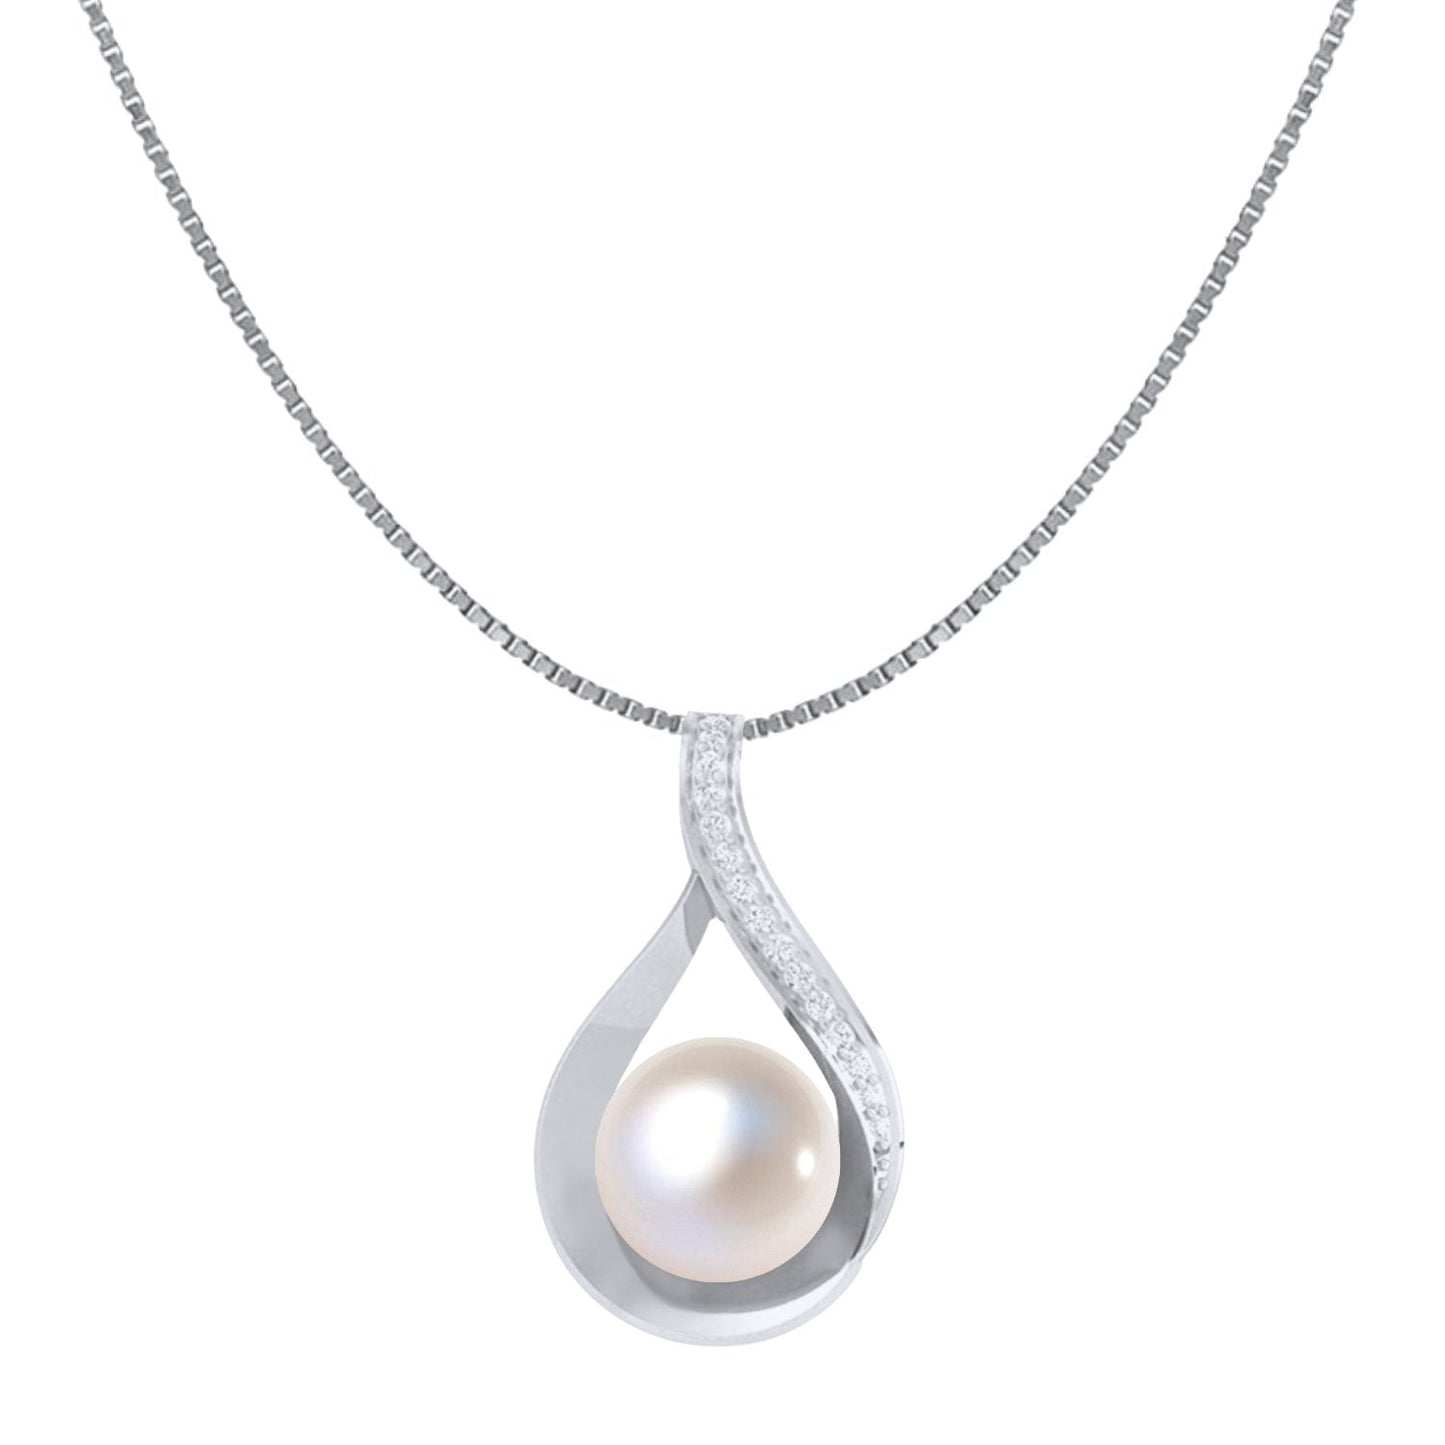 Pearl Pendant Designer in 92.5 Silver with Mirror finish Italian Chain - Brilliant Lustre South Sea Pearl - studded with Swiss Zirconia